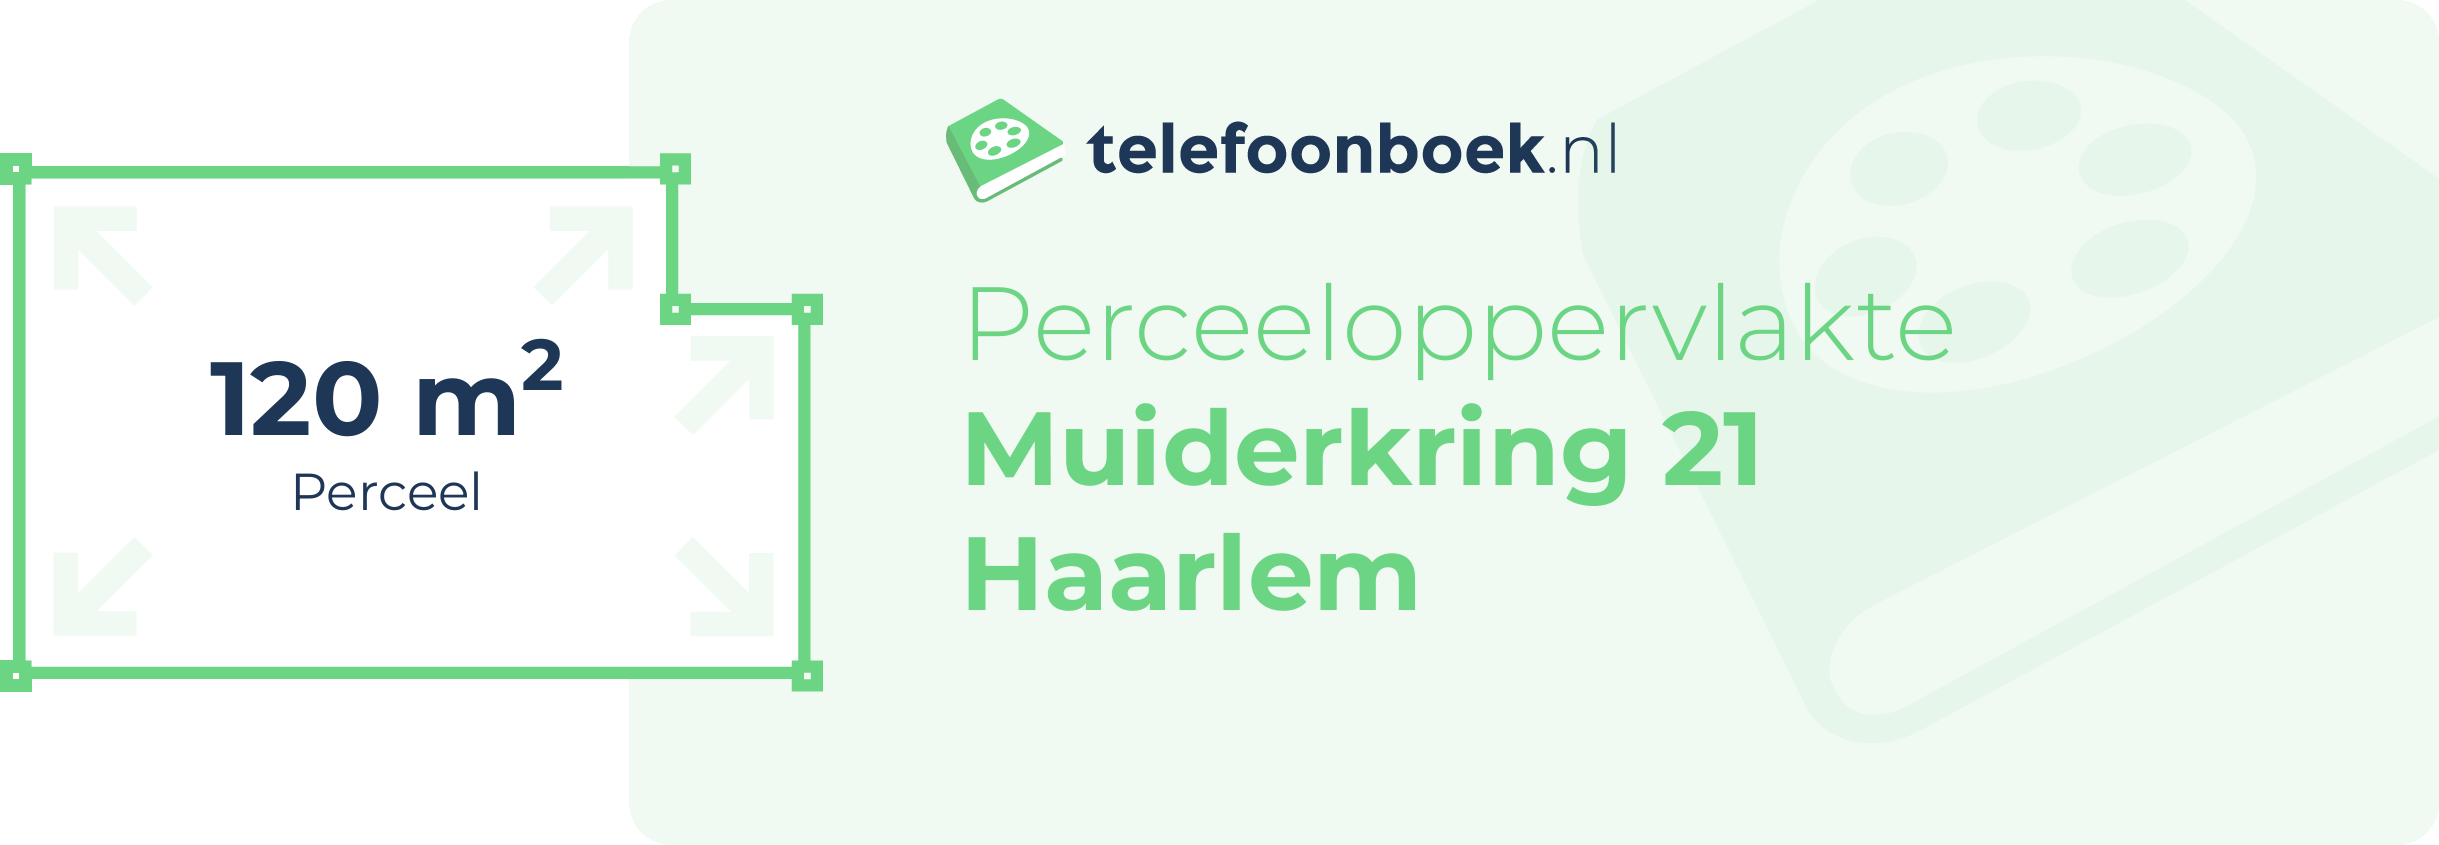 Perceeloppervlakte Muiderkring 21 Haarlem